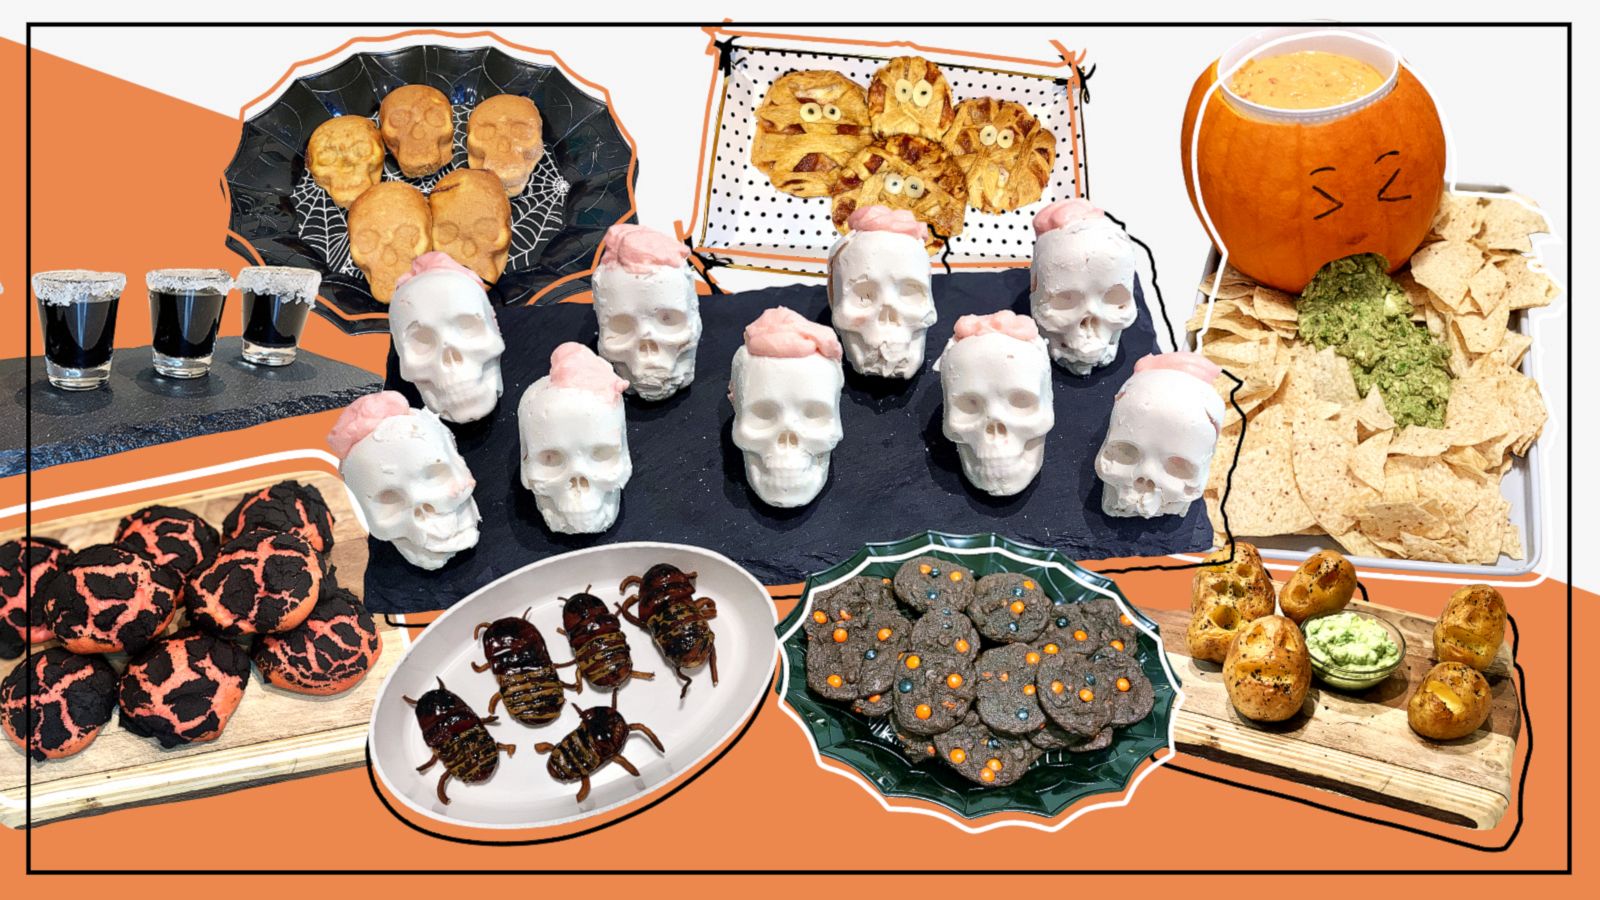 Halloween Fall themed Set of 3 Ice cube trays, candy mold, jello shot  skull/fang/pumpkin shapes 